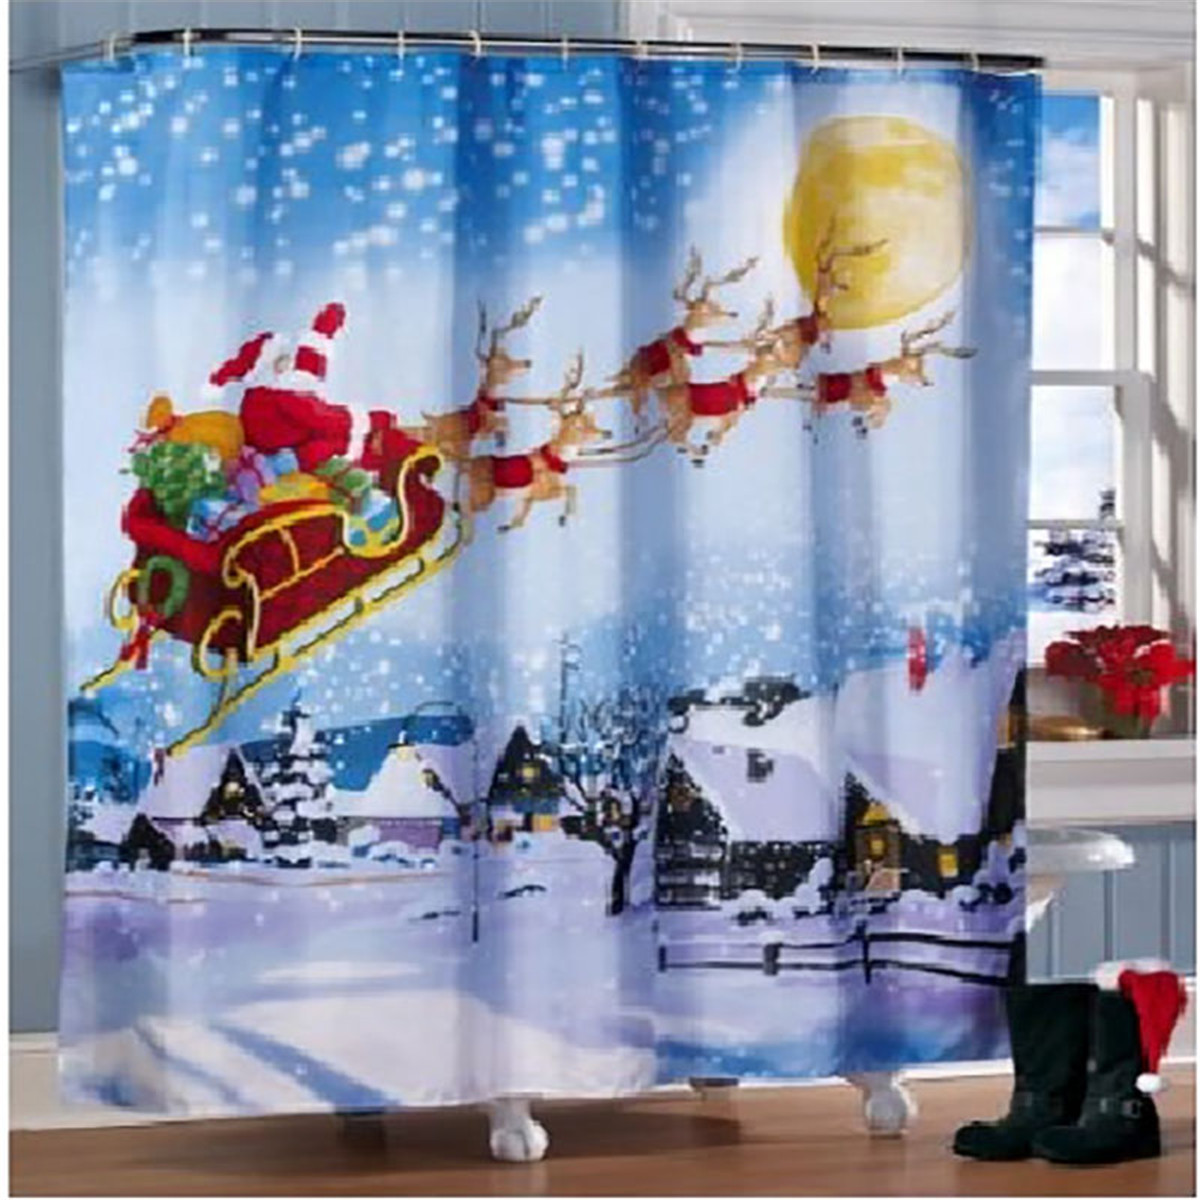 180x180cm-Christmas-Santa-Claus-Reindeer-Bathroom-Shower-Curtains-With-12-Hooks-1377854